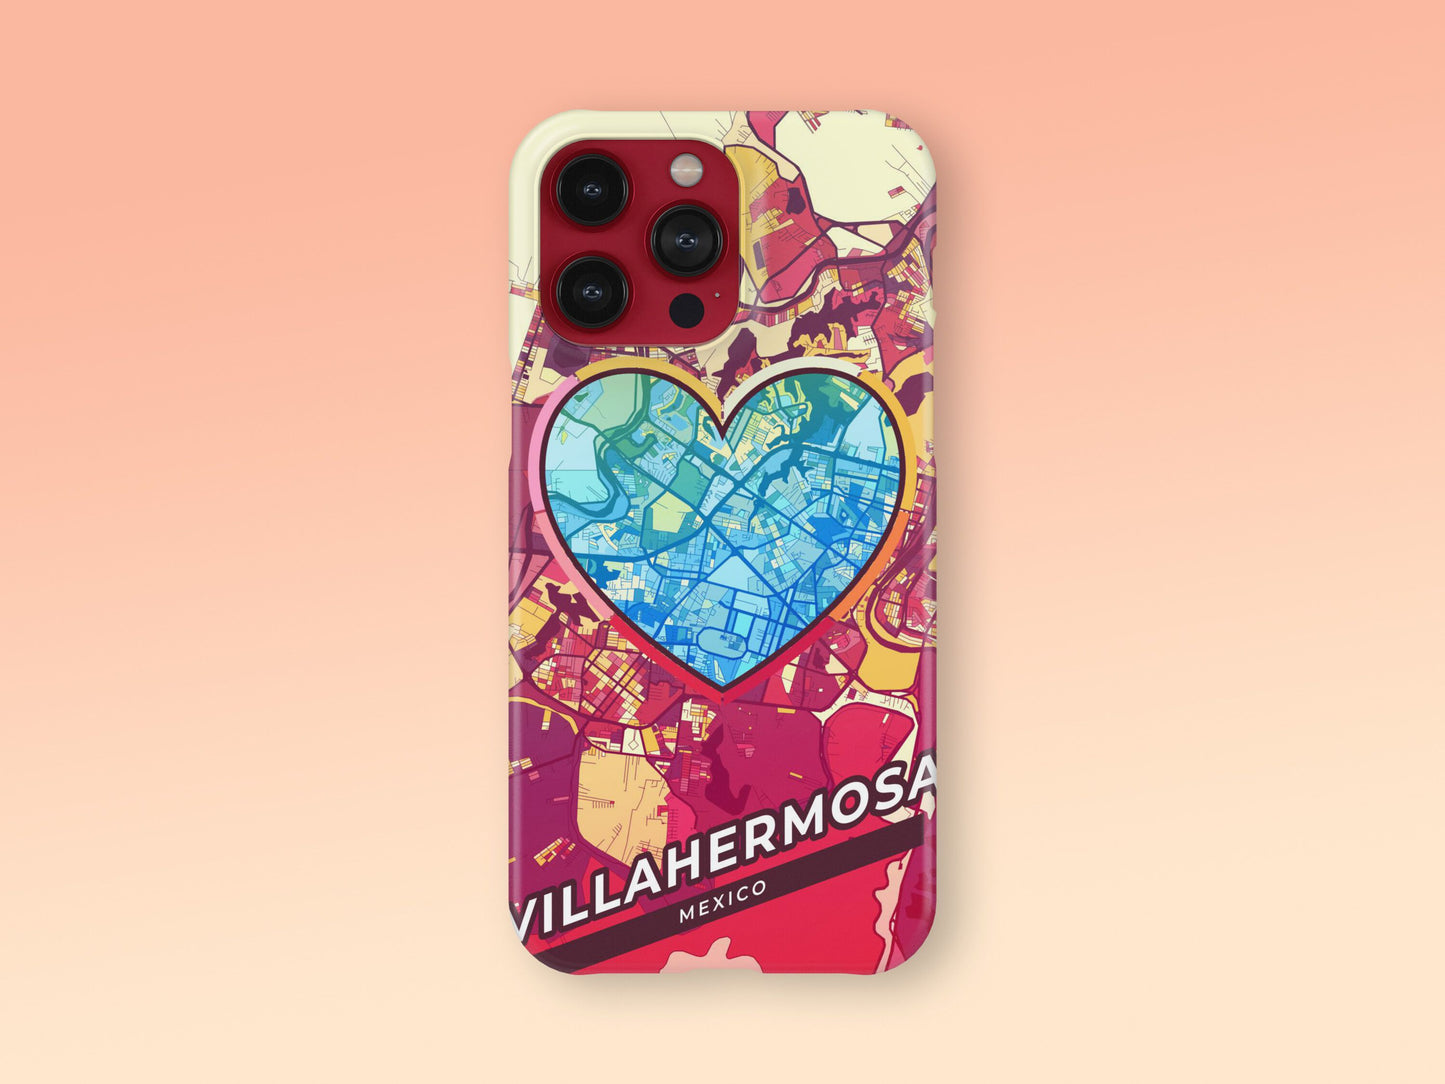 Villahermosa Mexico slim phone case with colorful icon 2